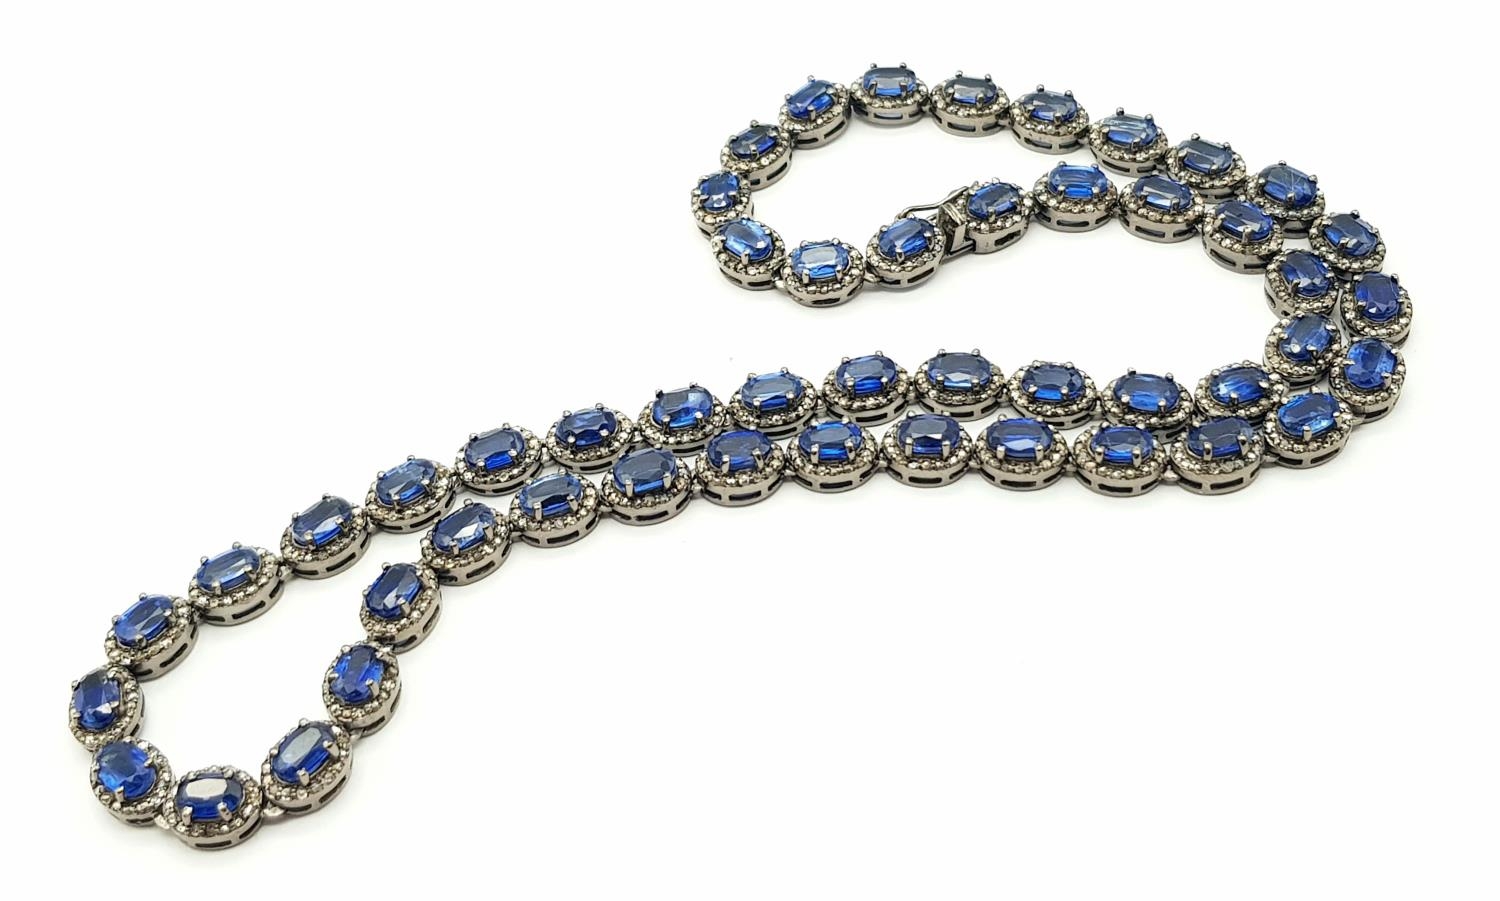 A 25ctw Kyanite Gemstone Tennis Necklace with Diamond Accents. 4ctw of old cut diamonds. Set in - Bild 3 aus 6